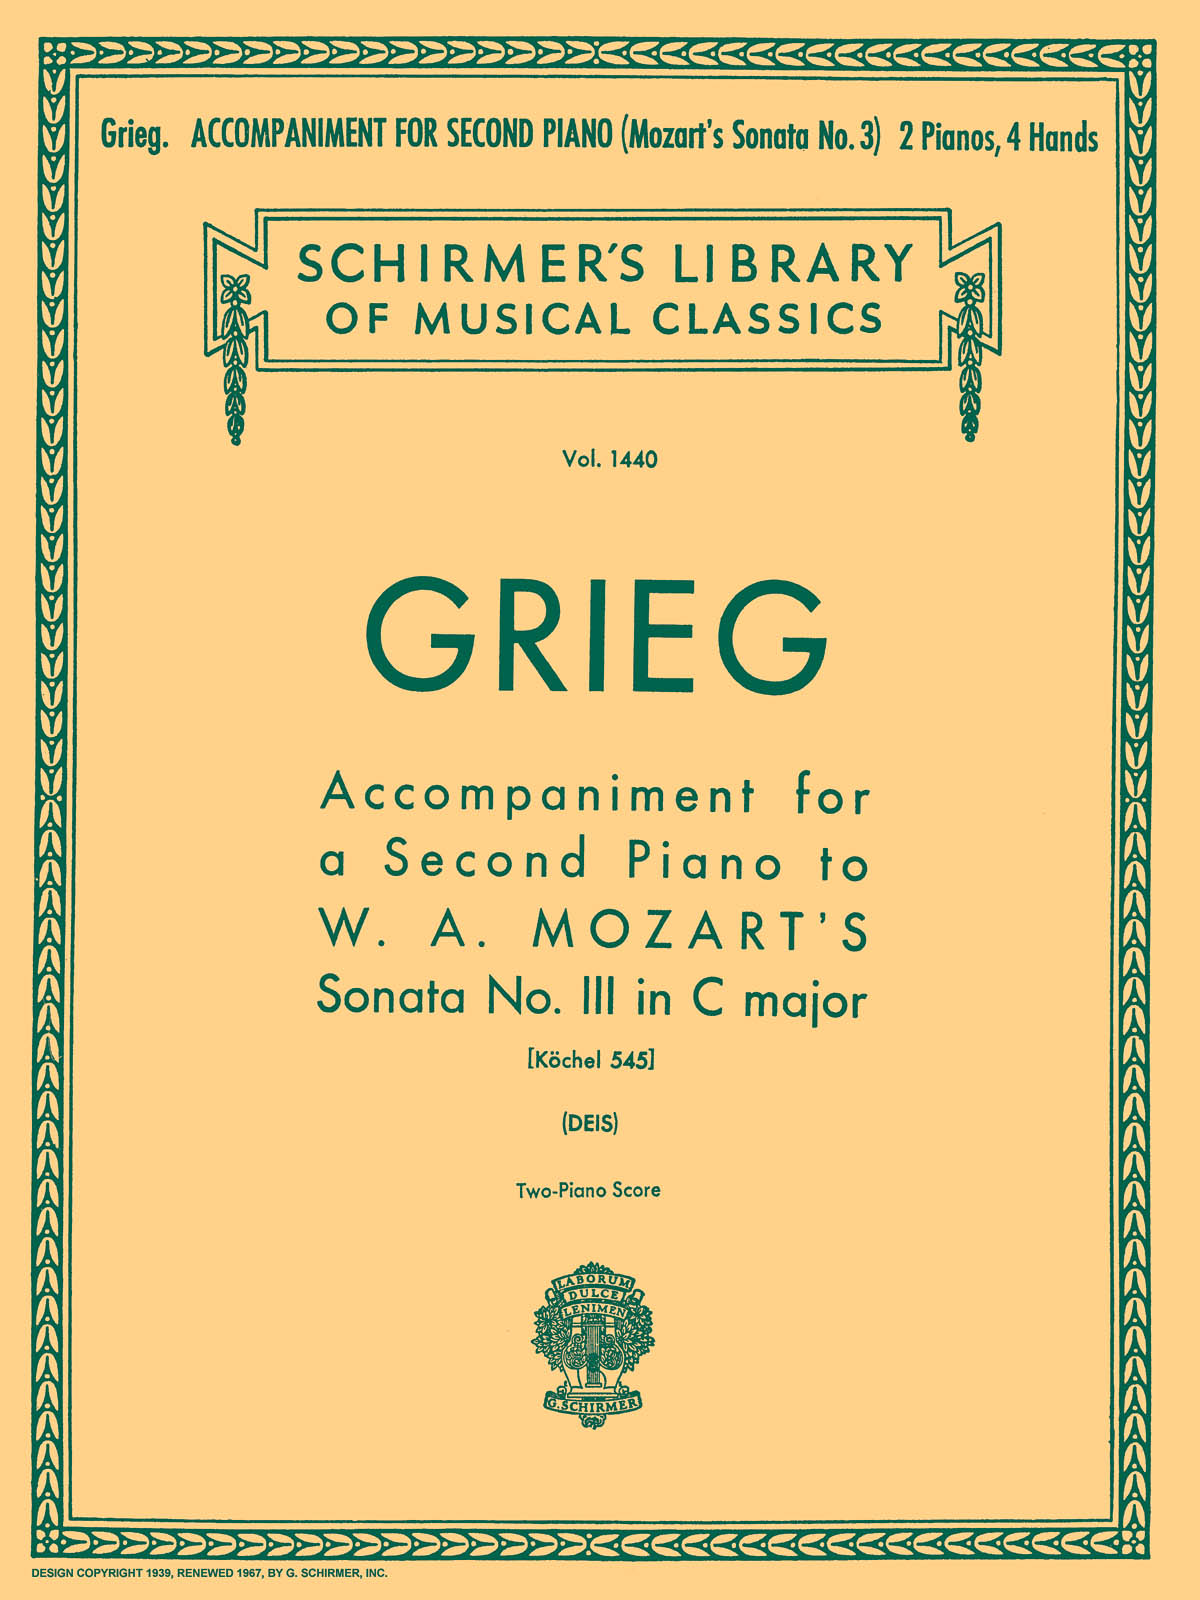 Grieg: Accompaniment fuer Second Piano To Mozart Sonata K.545